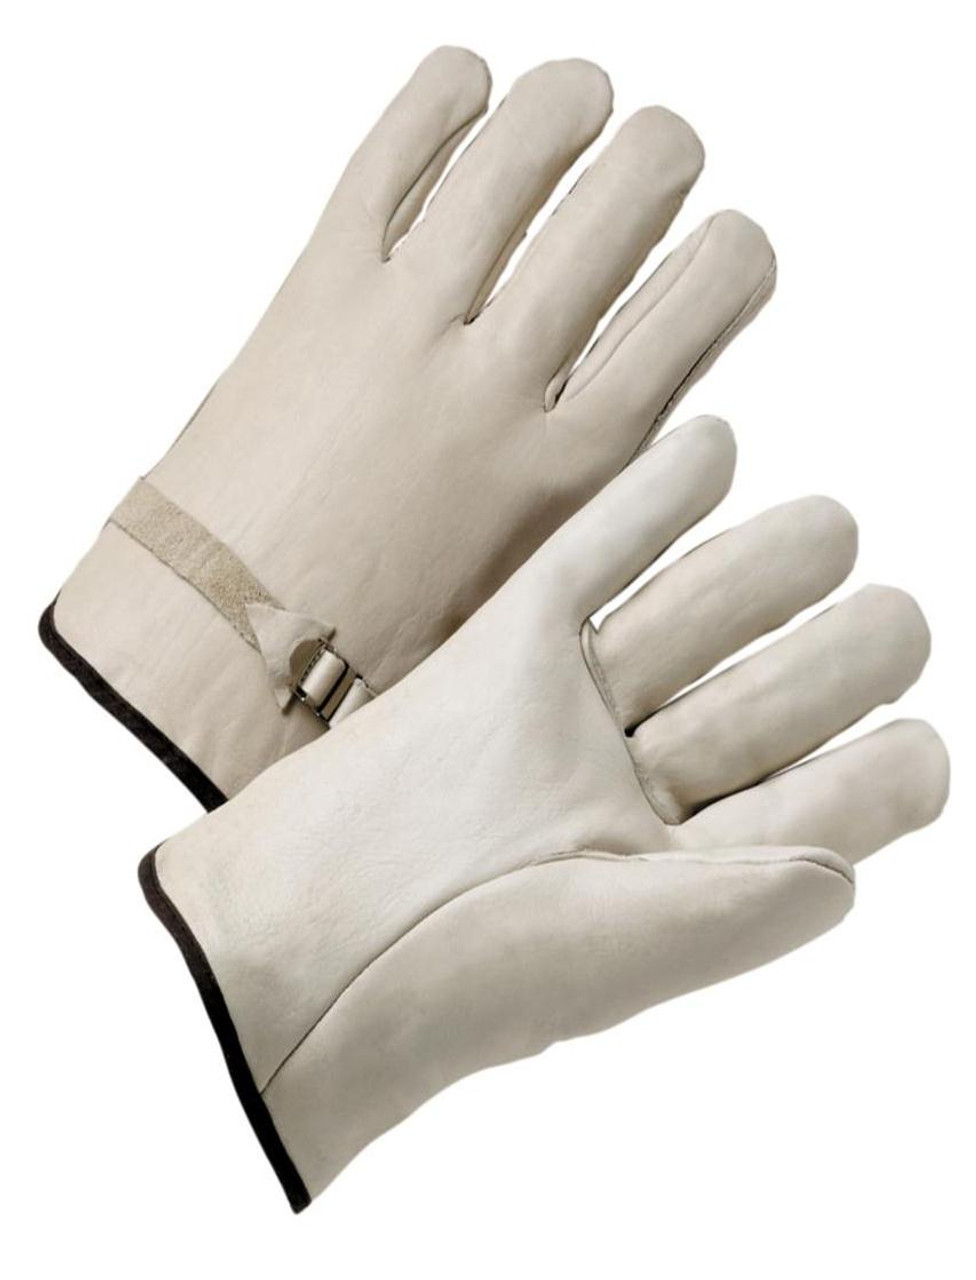 TEXAS TUFF Select Grain Cowhide Work Gloves W/Wrist Pull Strap